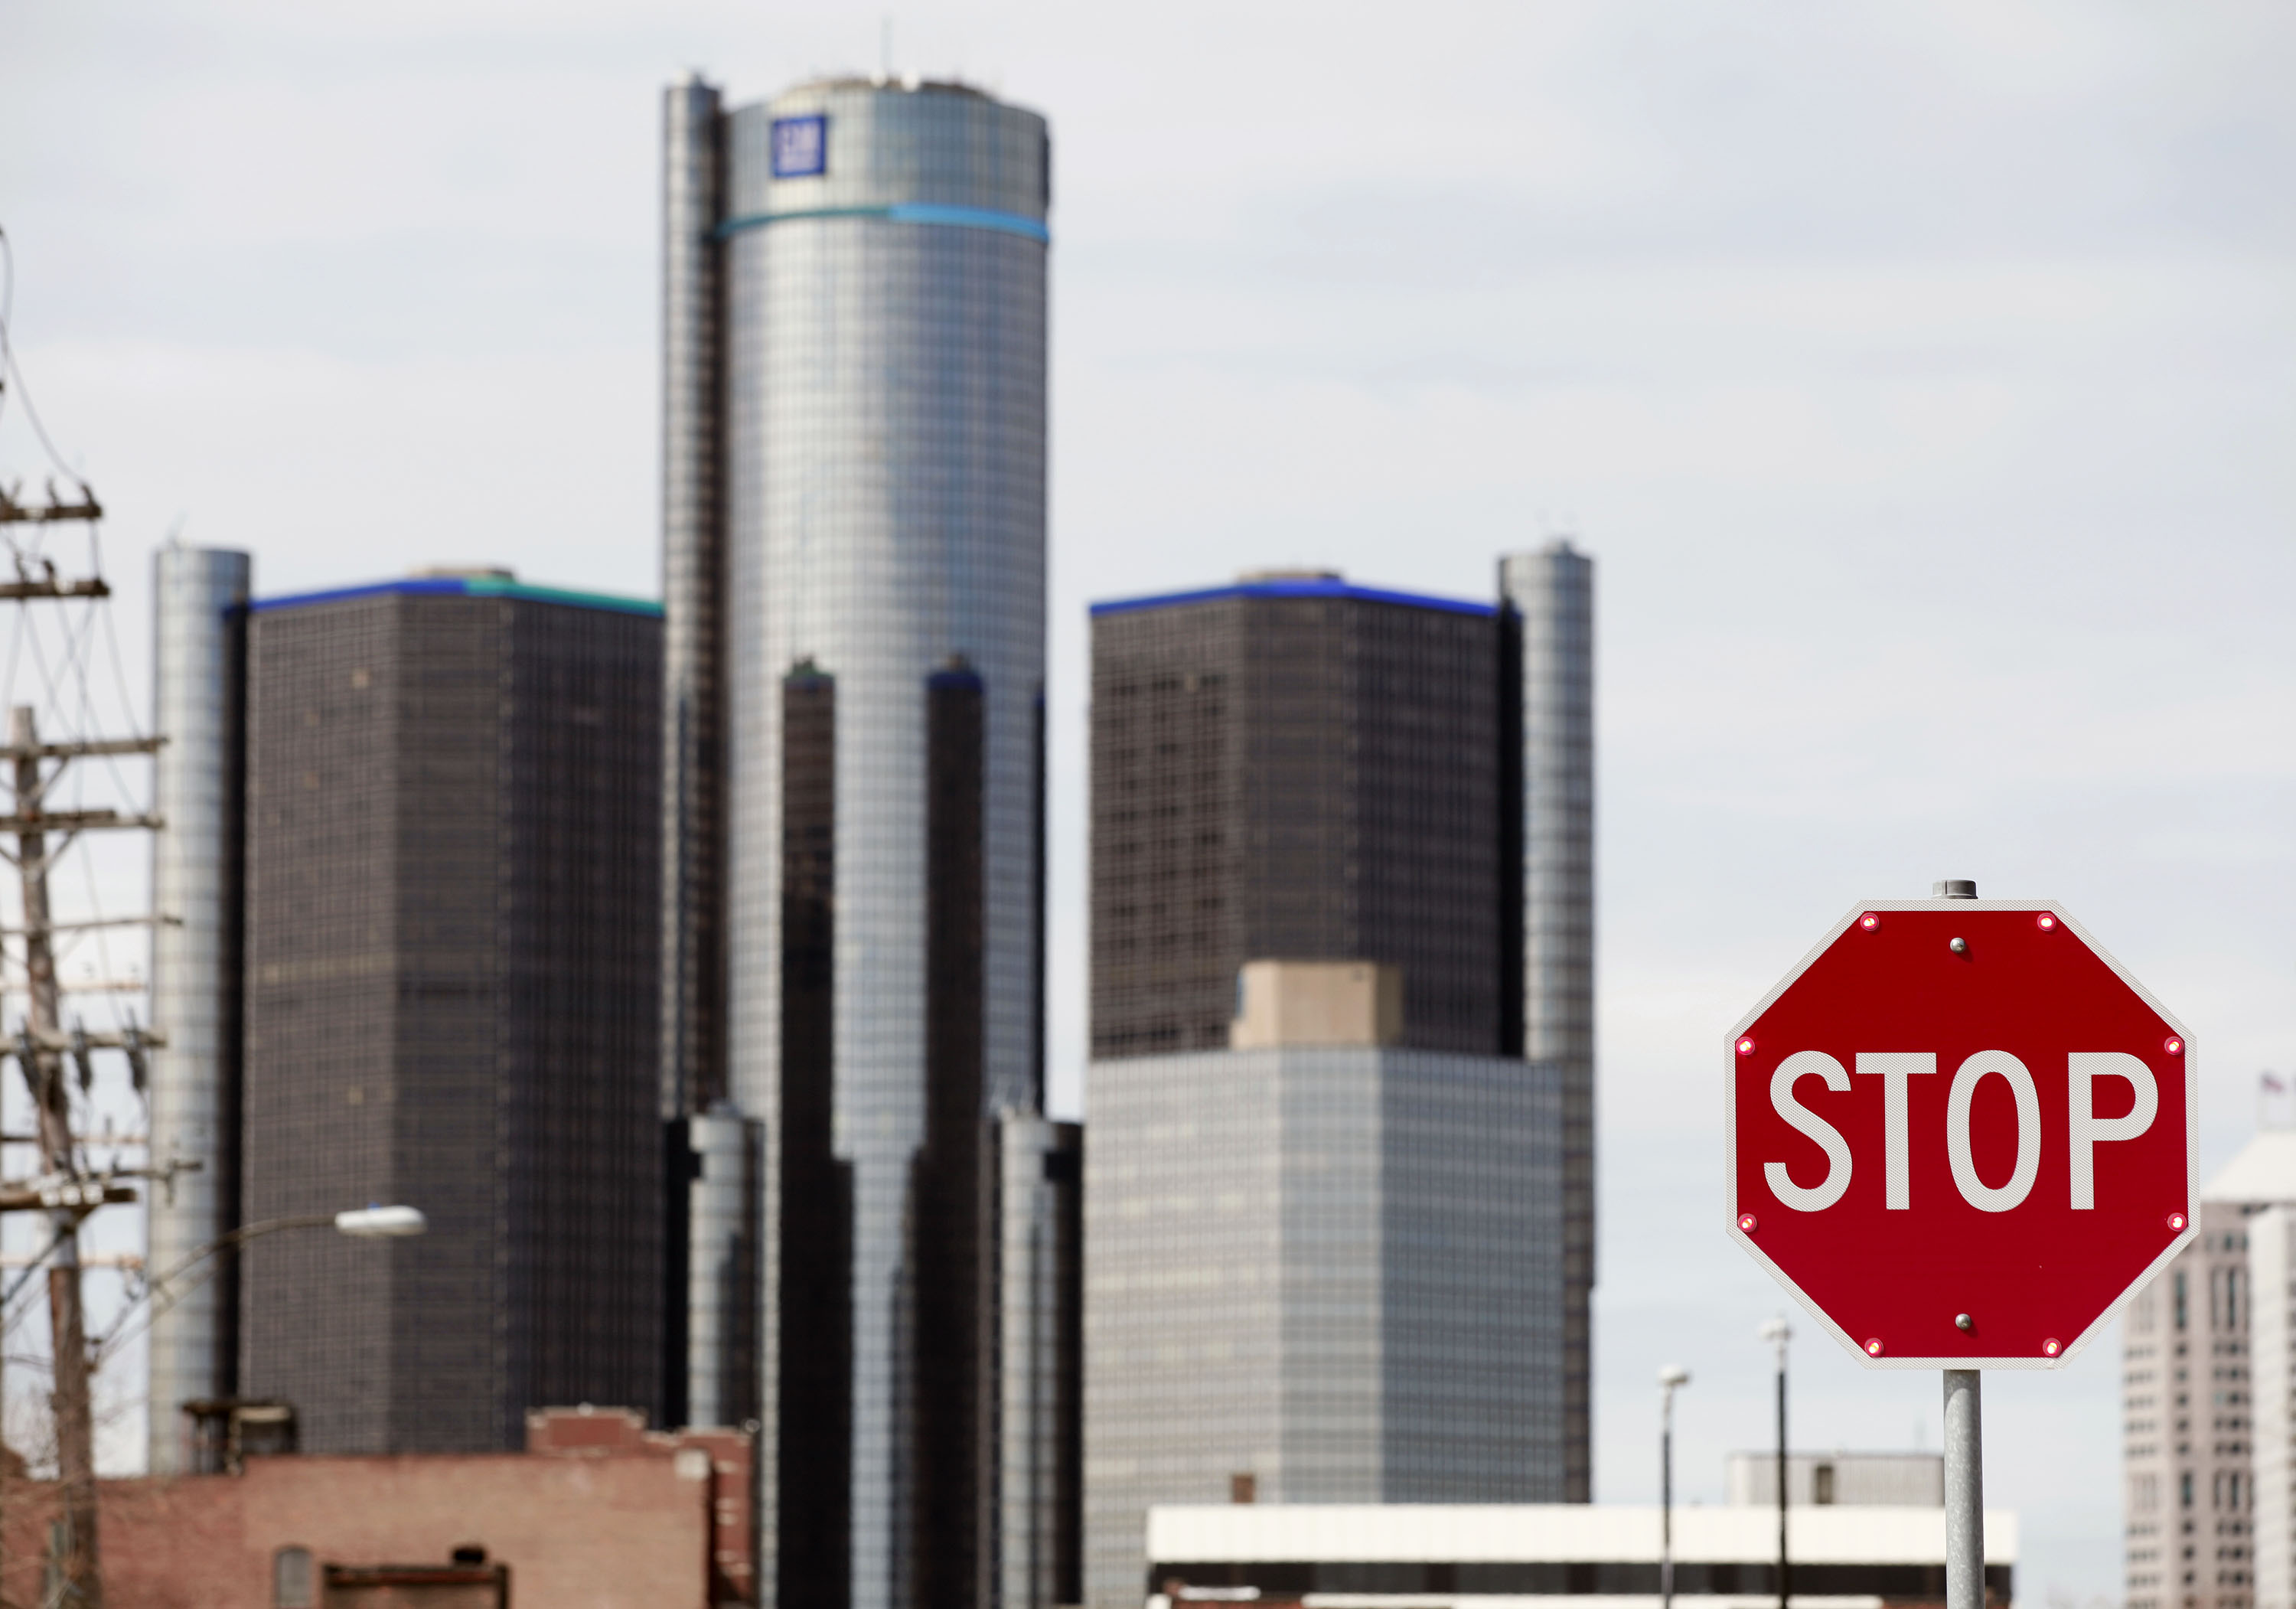 The General Motors world headquarters is shown April 24, 2014 in Detroit, Michigan. (Bill Pugliano&mdash;Getty Images)